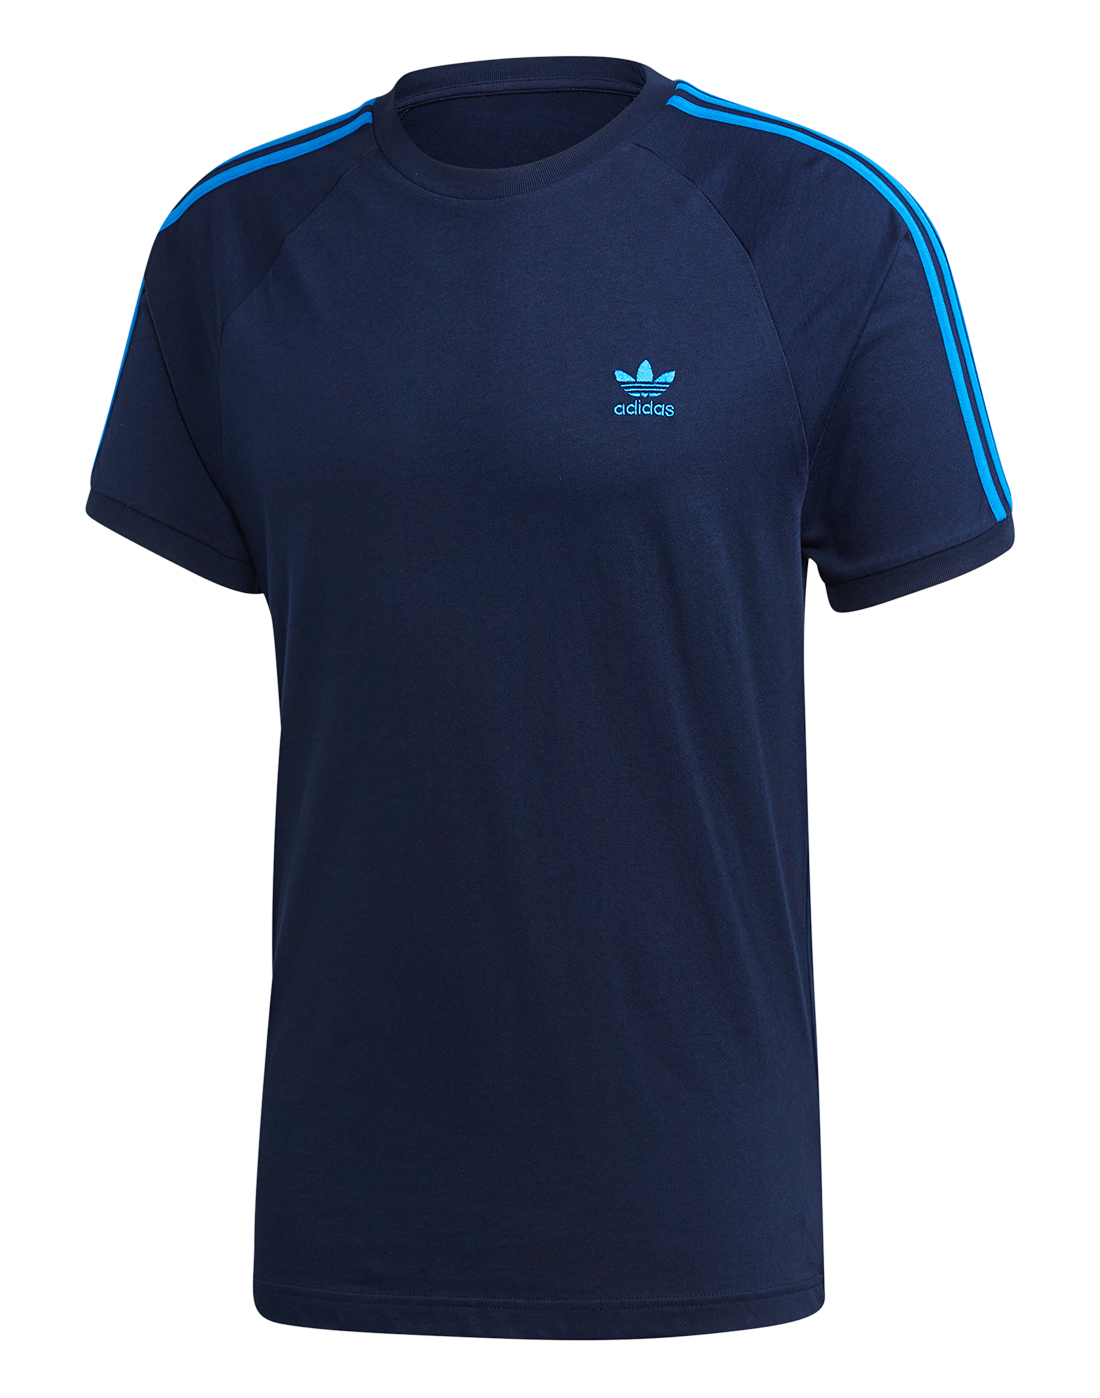 adidas Originals Mens 3-Stripes T-Shirt - Navy | Life Style Sports IE